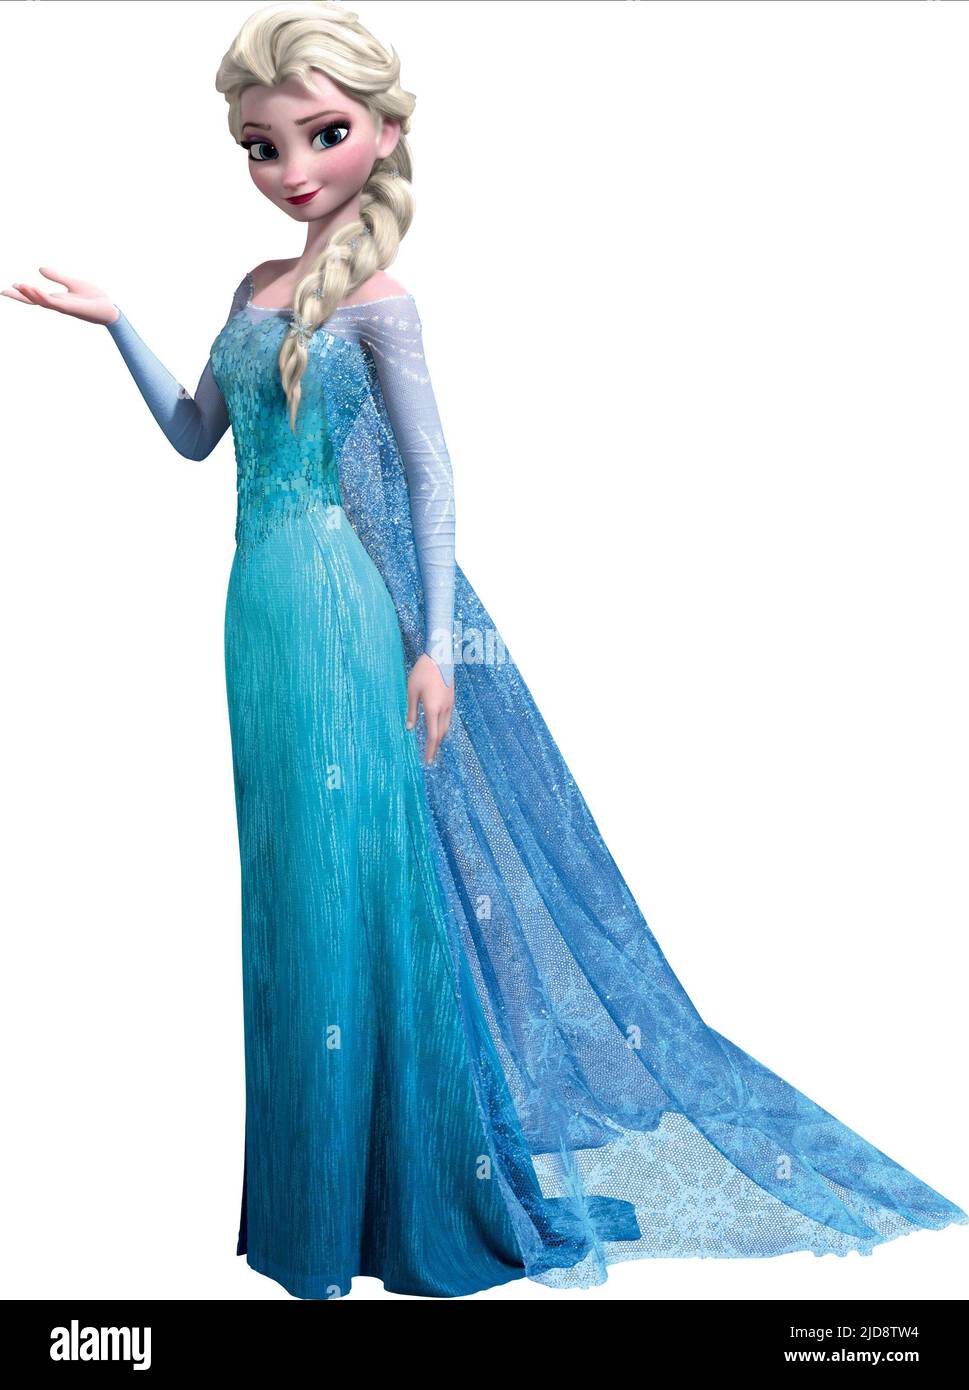 Stunning Collection of 4K Frozen Elsa Images – Over 999 High-Quality Frozen Elsa Images